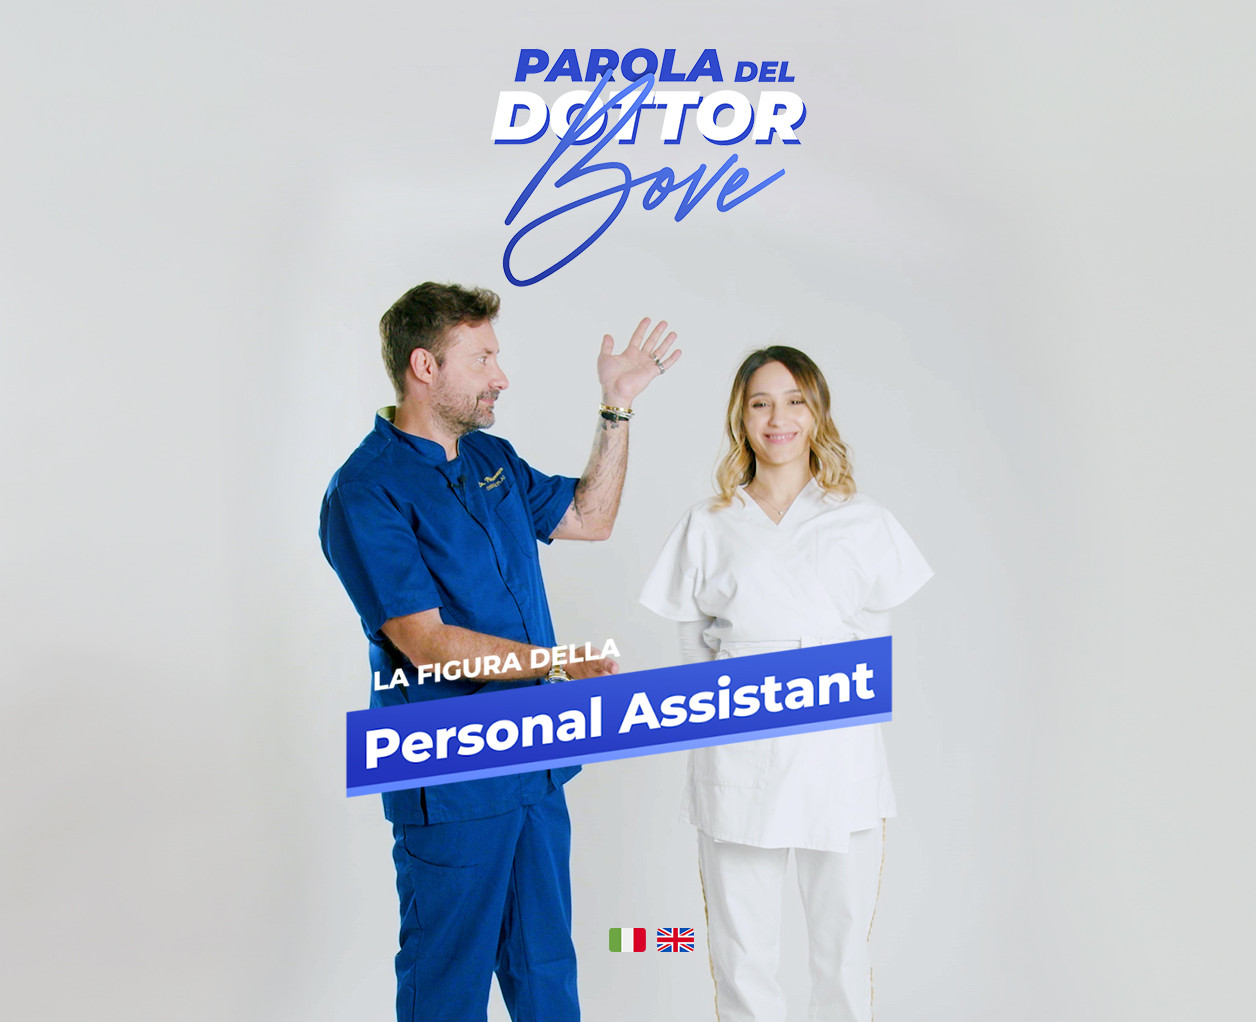 Personal Assistant Dott Pierfrancesco Bove